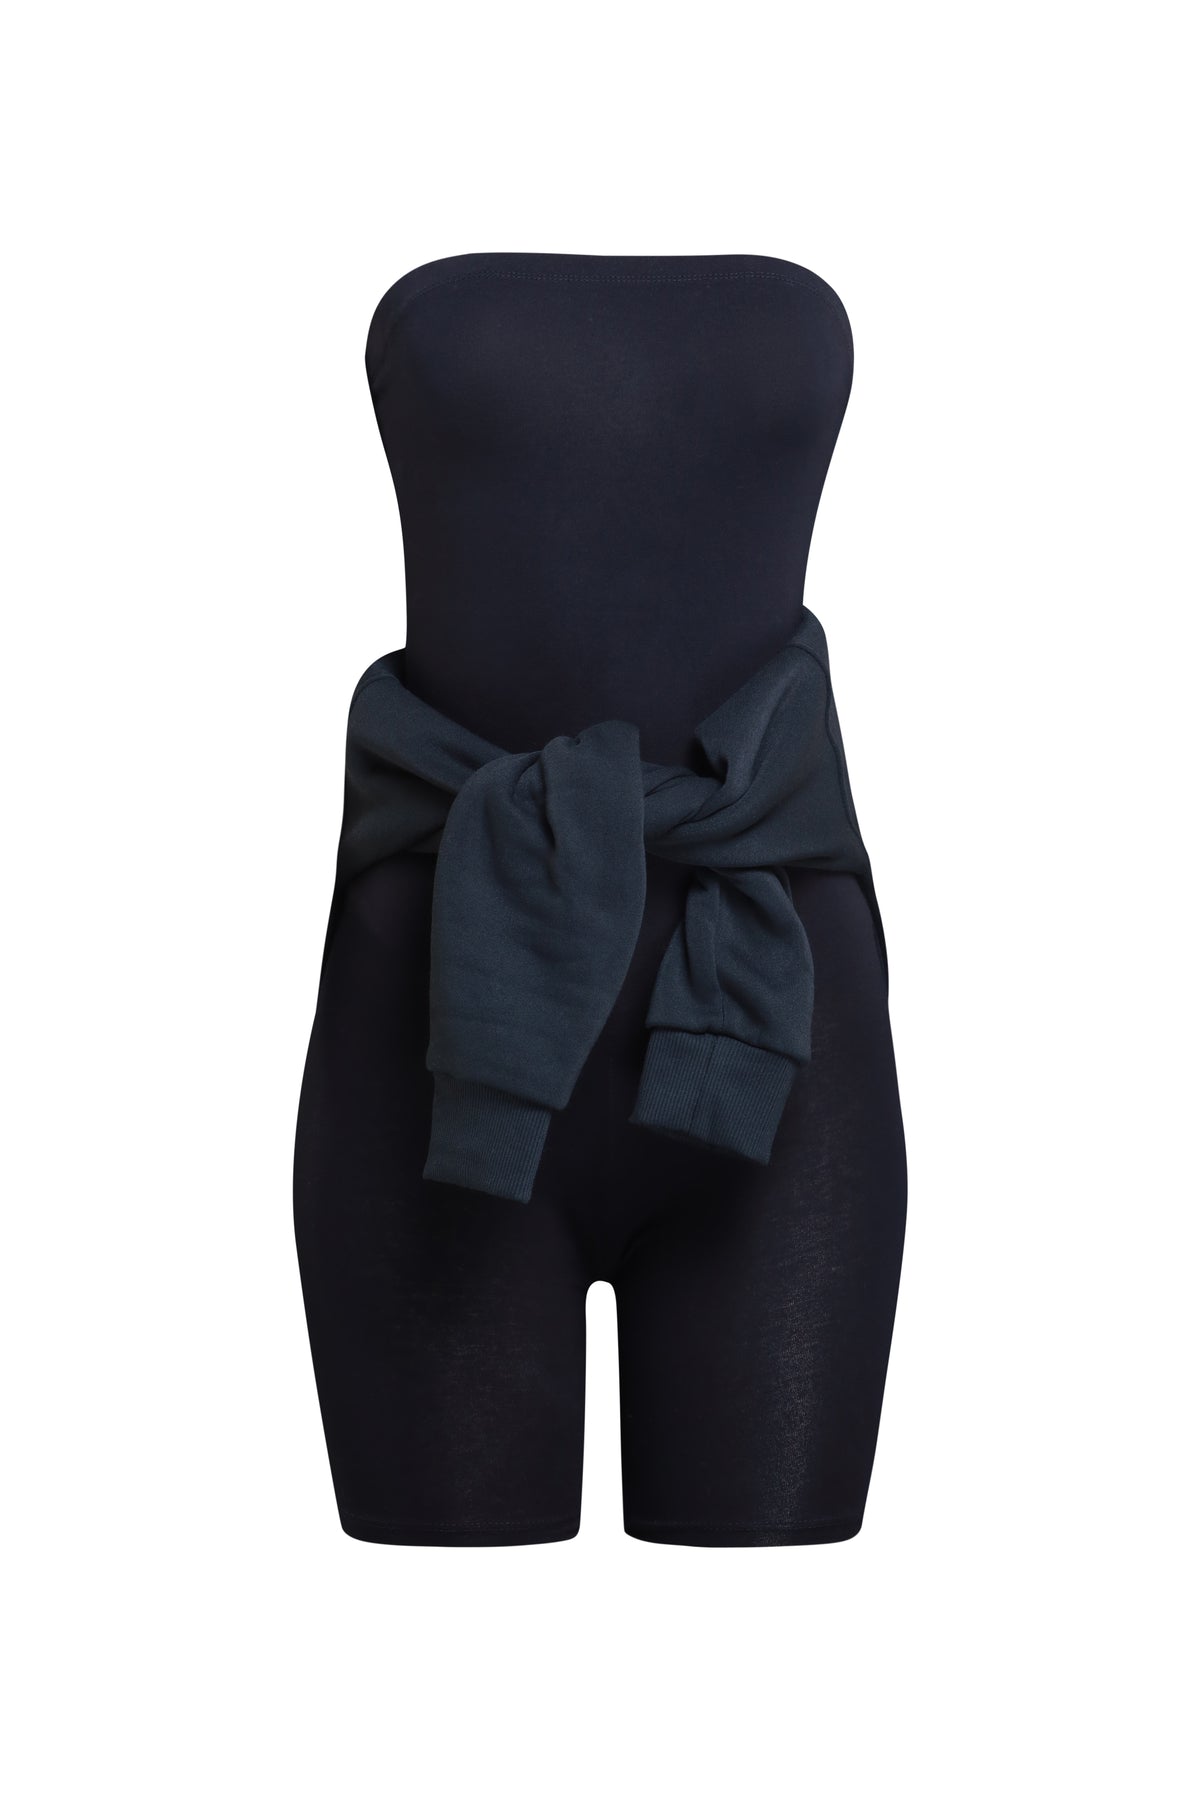 
              Fade To Black 3 Piece Crewneck Bodysuit Short Set - Black/Black - Swank A Posh
            